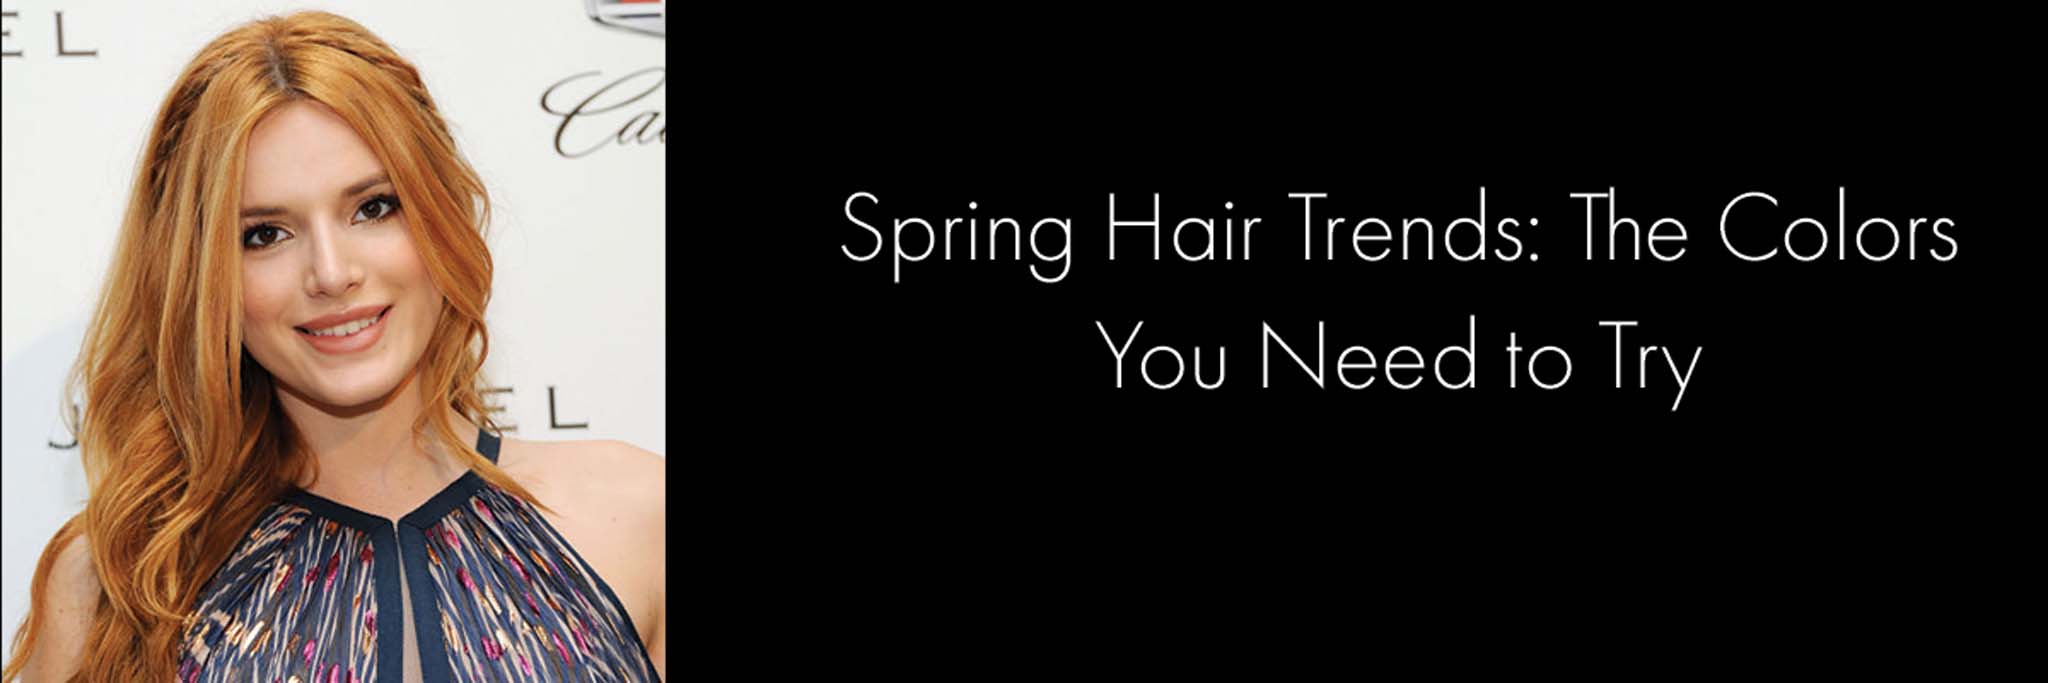 spring hair trends